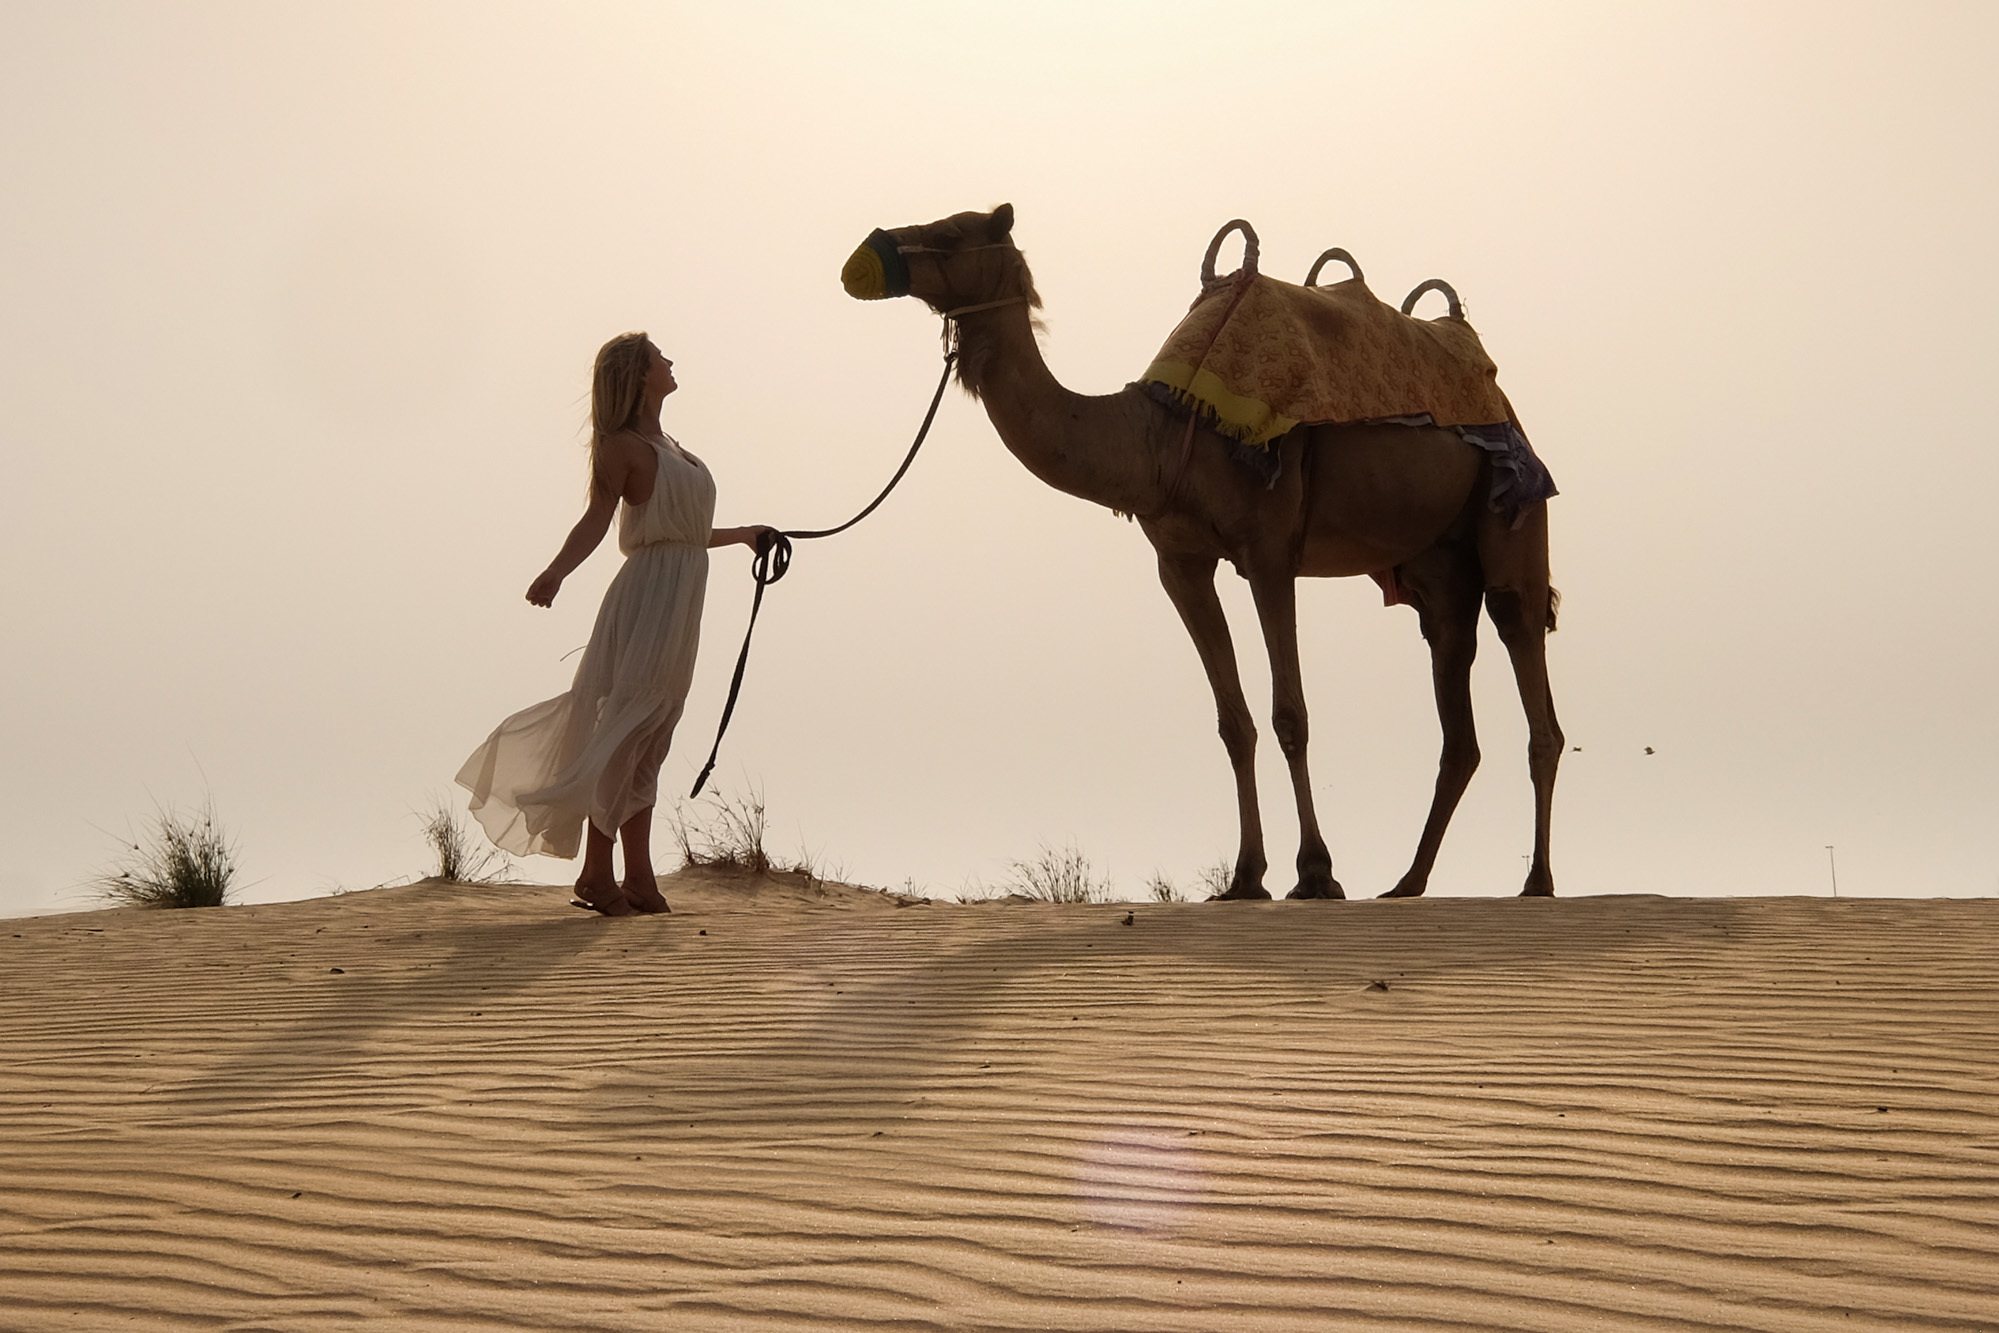 UAE Solo Female Travel